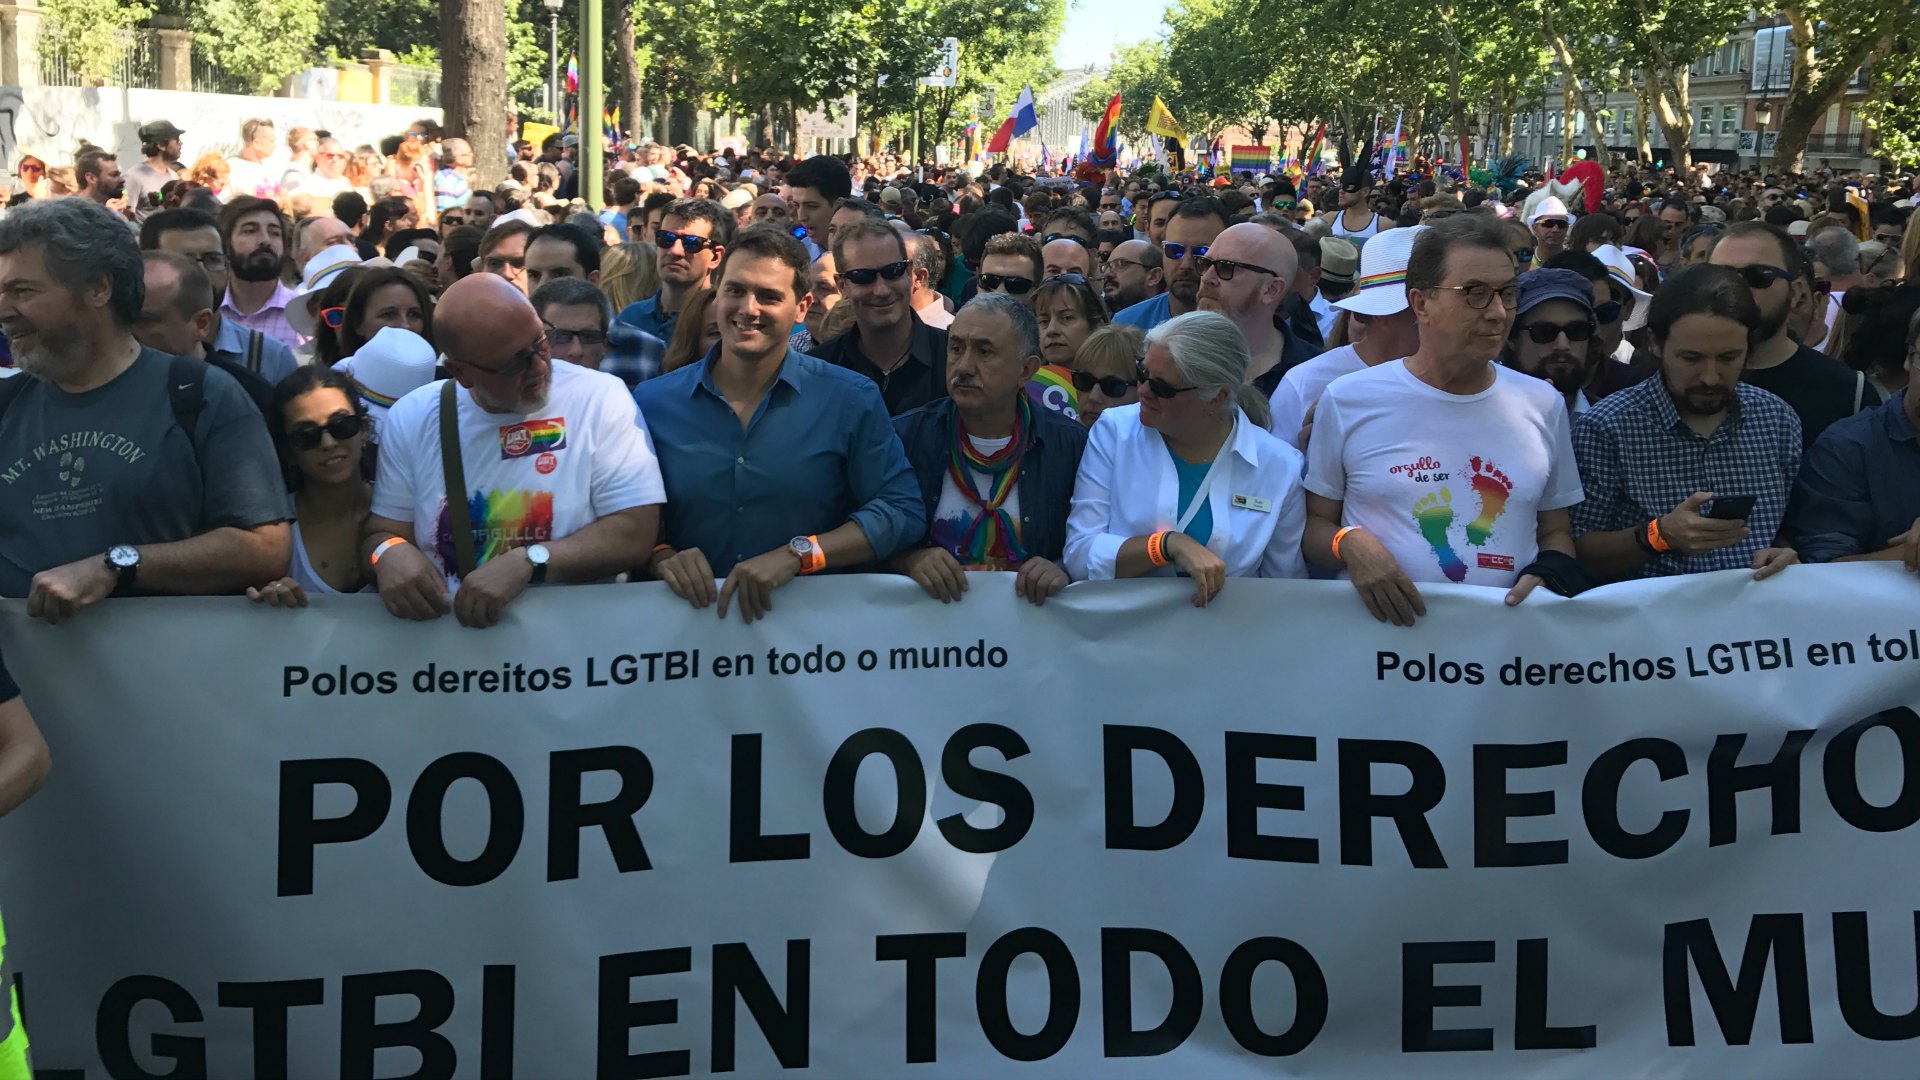 La WorldPride marcha por Madrid festiva y blindada 2